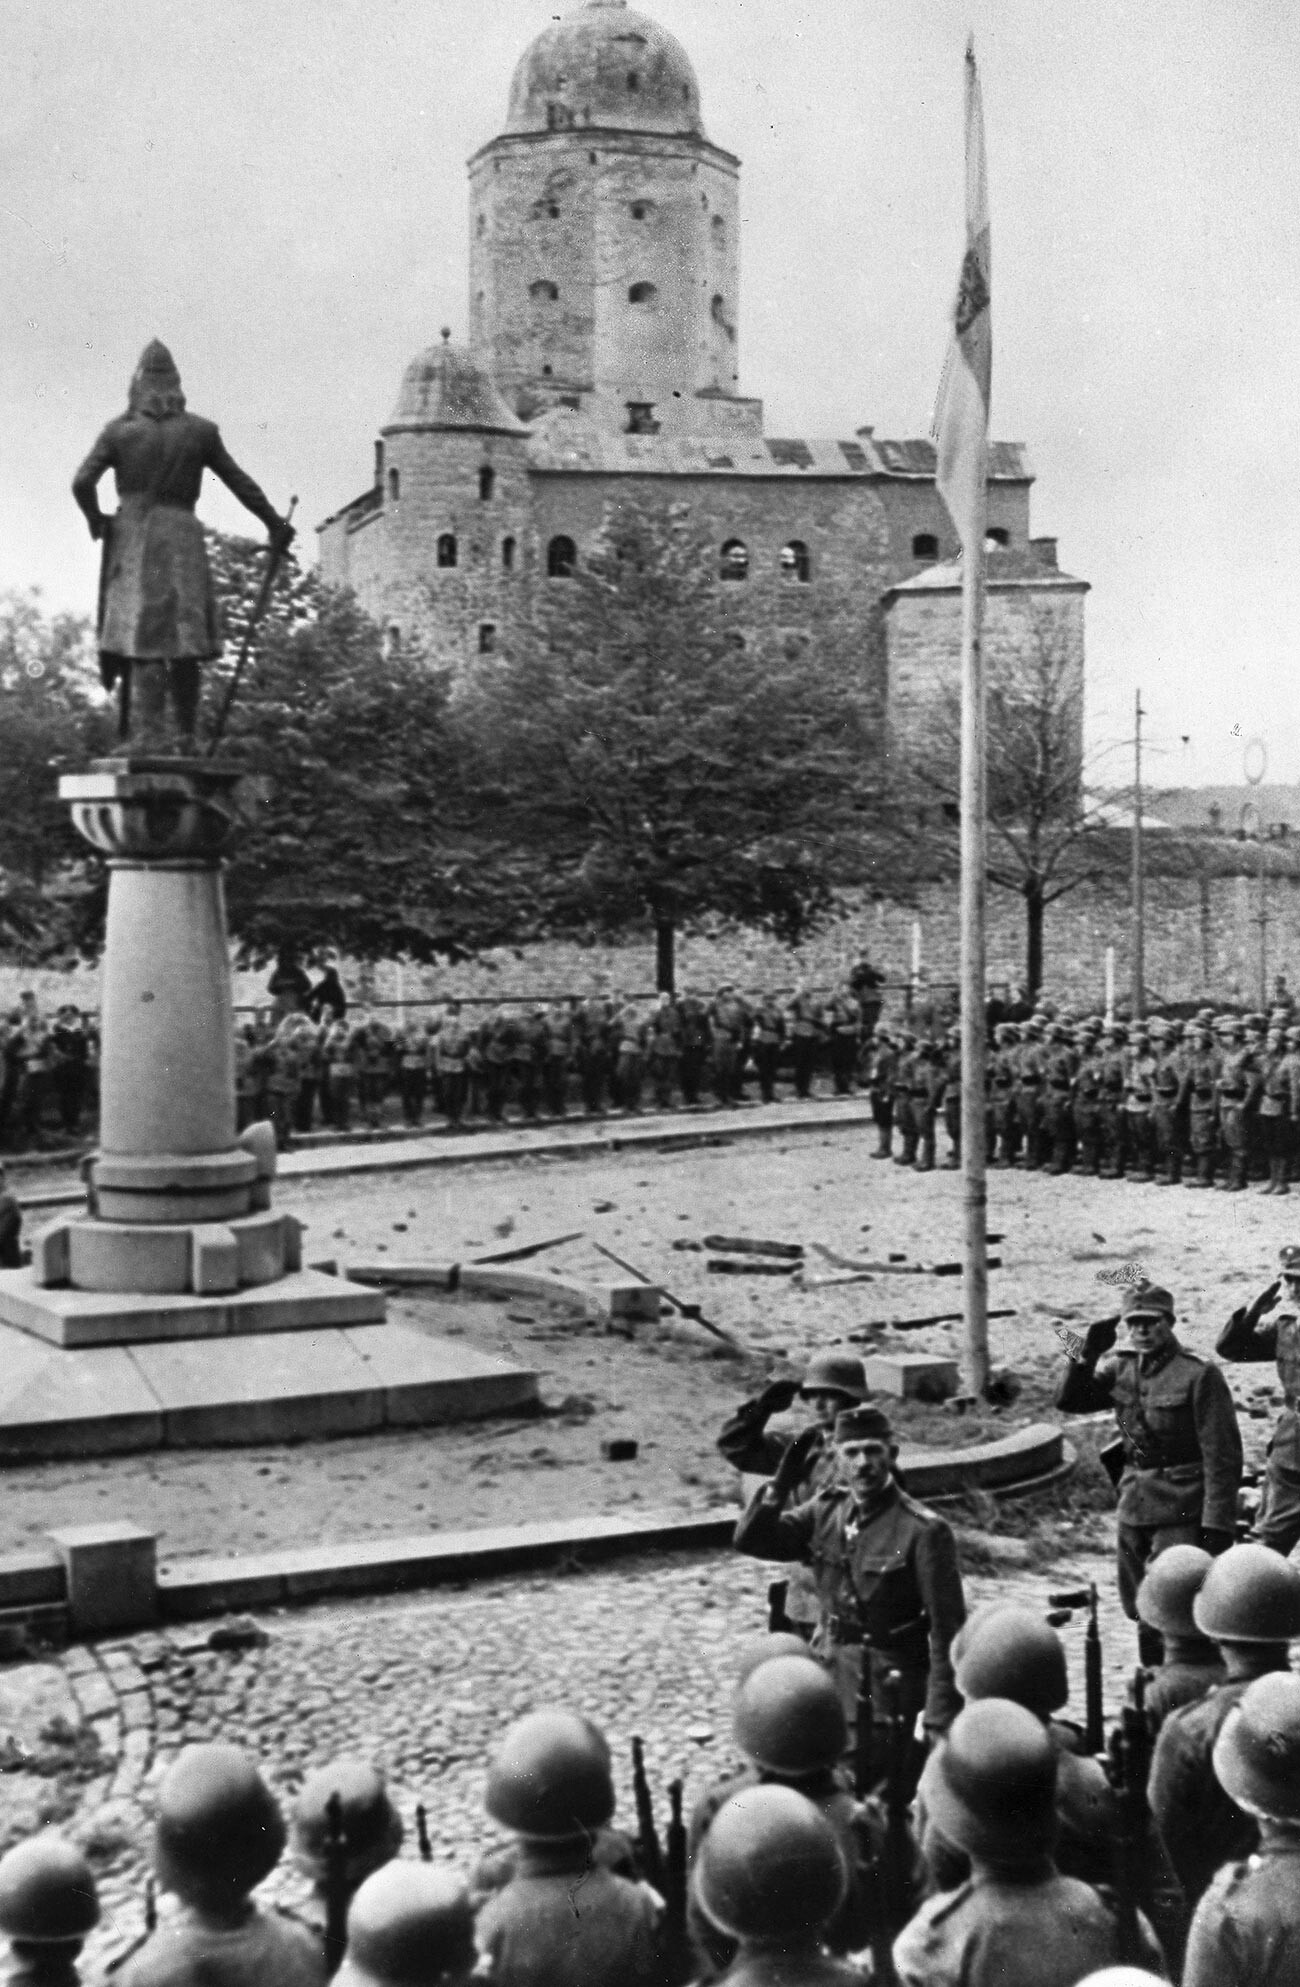 Le truppe finlandesi a Vyborg

